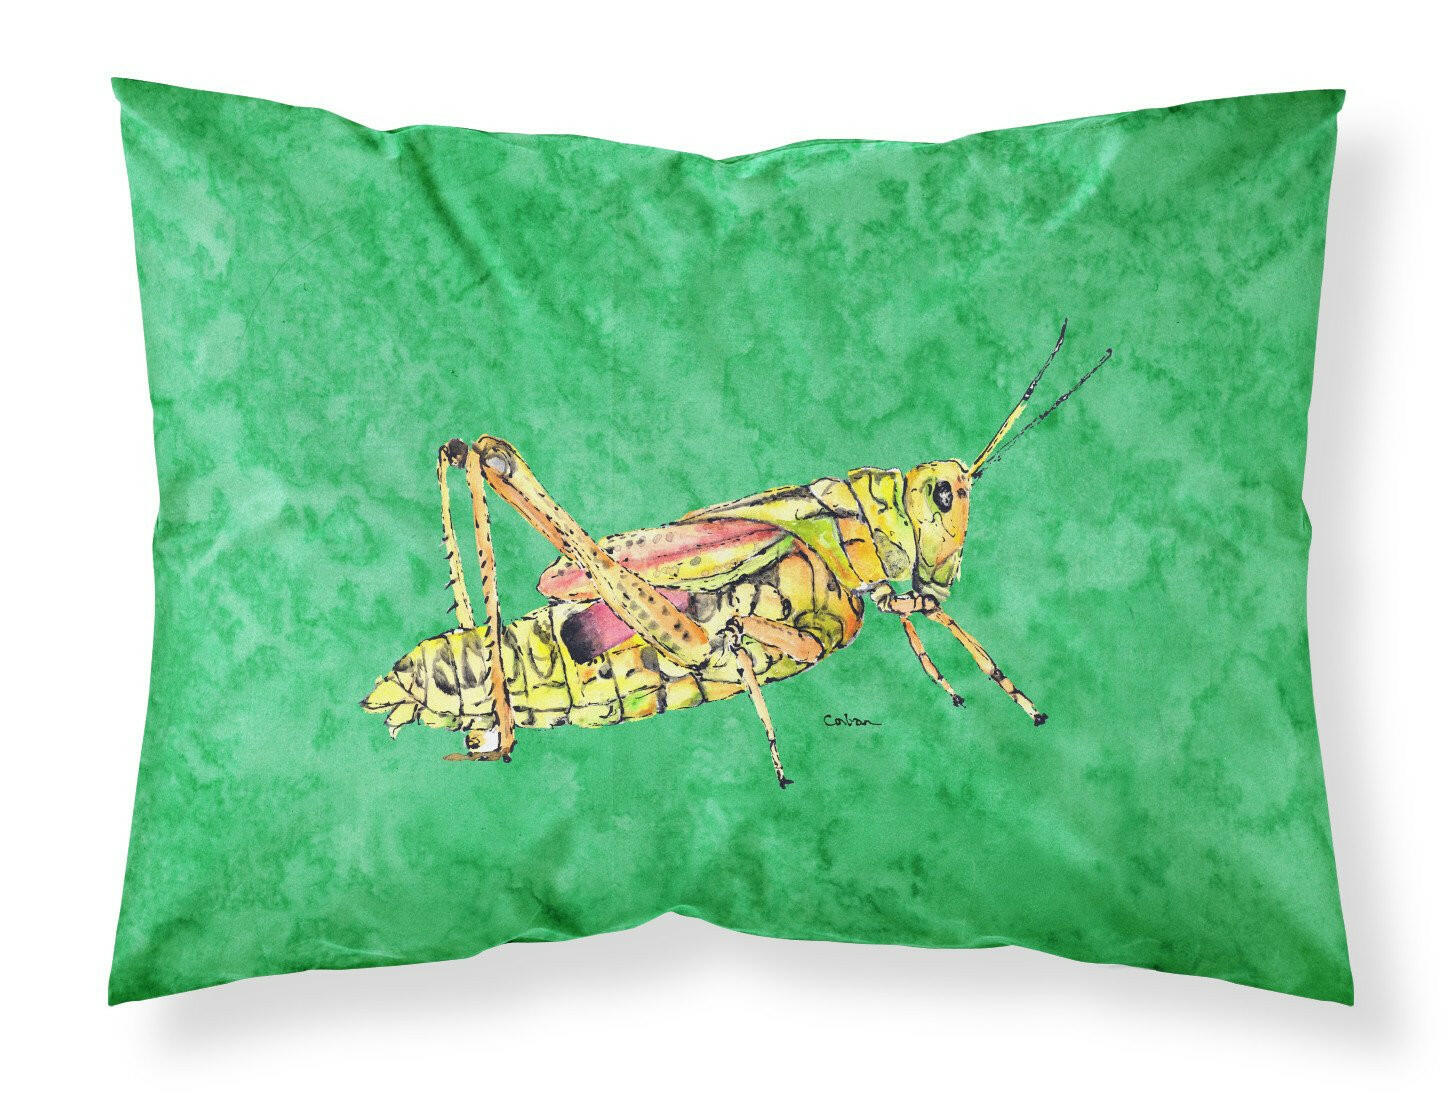 Grasshopper on Green Moisture wicking Fabric standard pillowcase by Caroline's Treasures